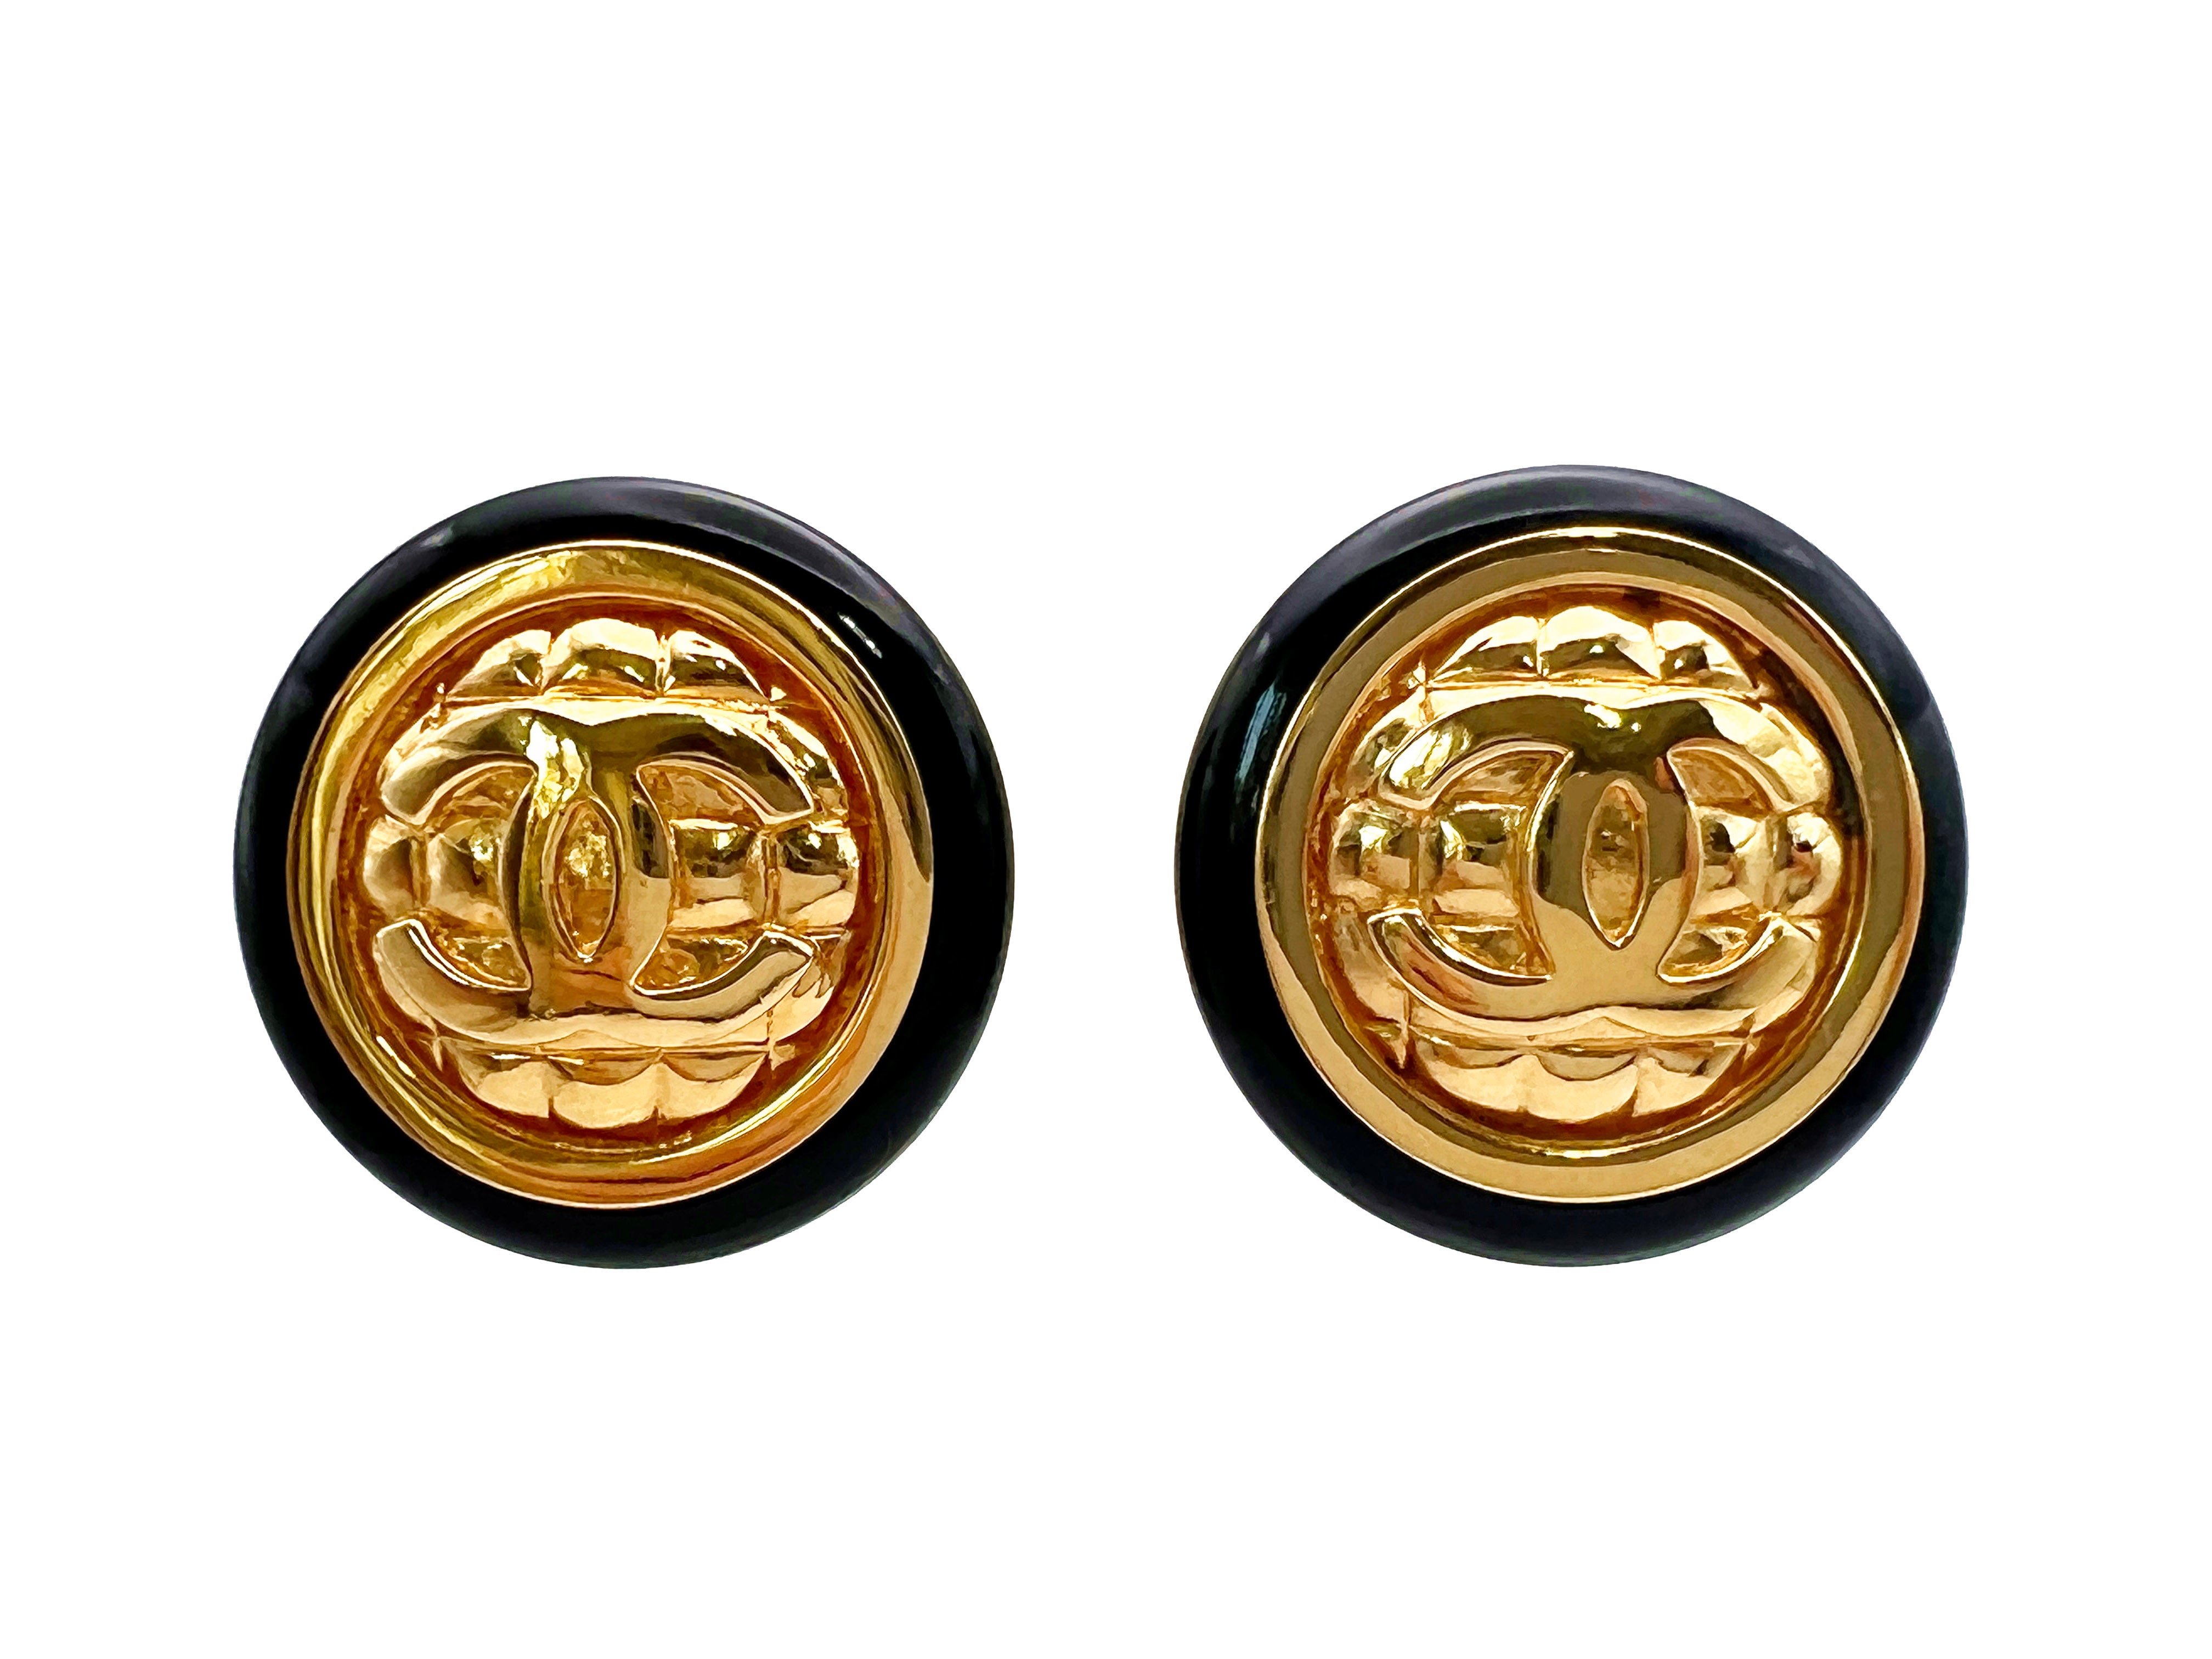 Chanel Black & Silver Tone Cc Button Earrings - 2 Pieces